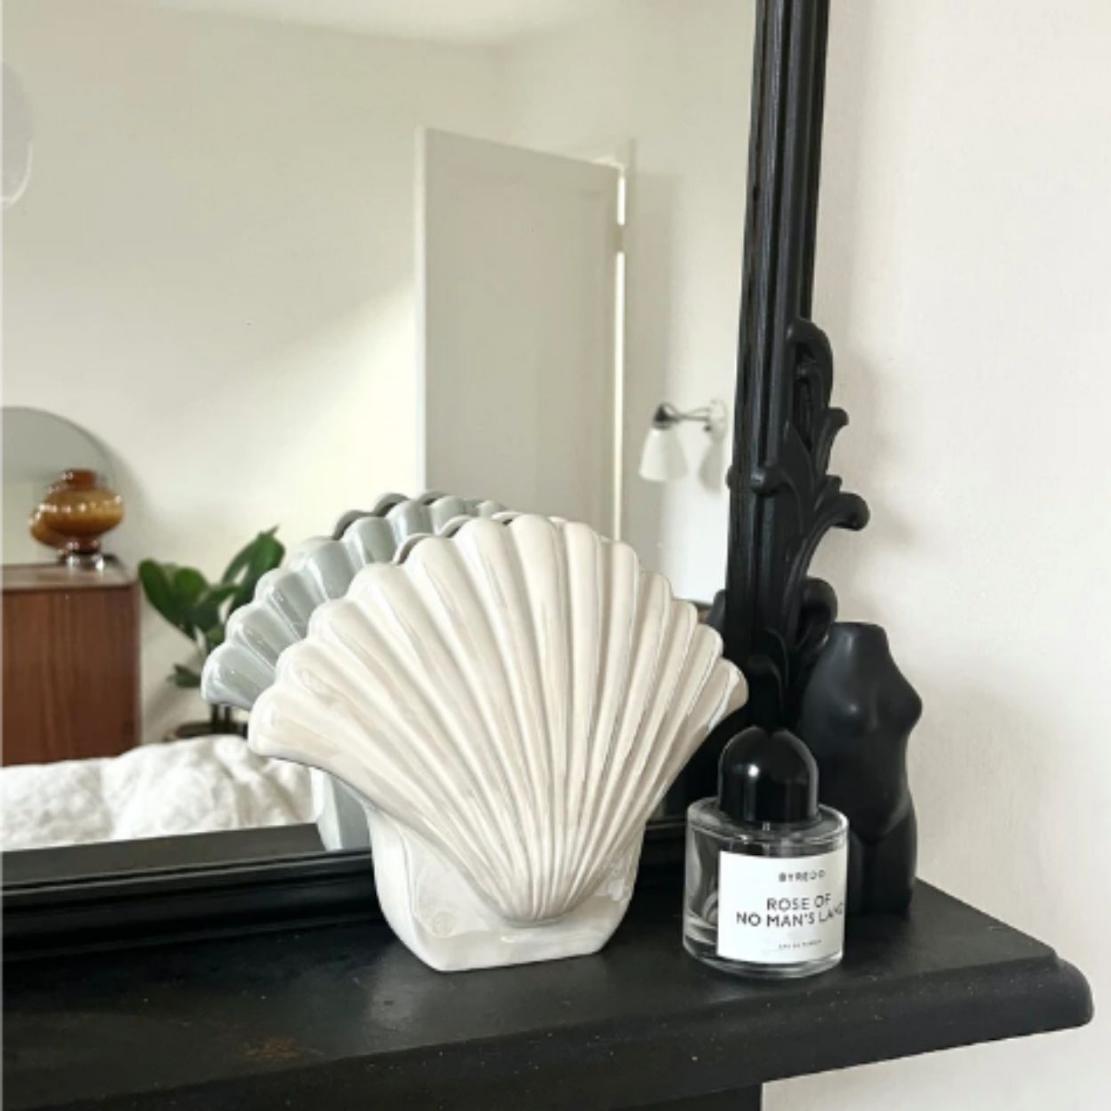 White, ceramic, elegant shell vase on black shelf